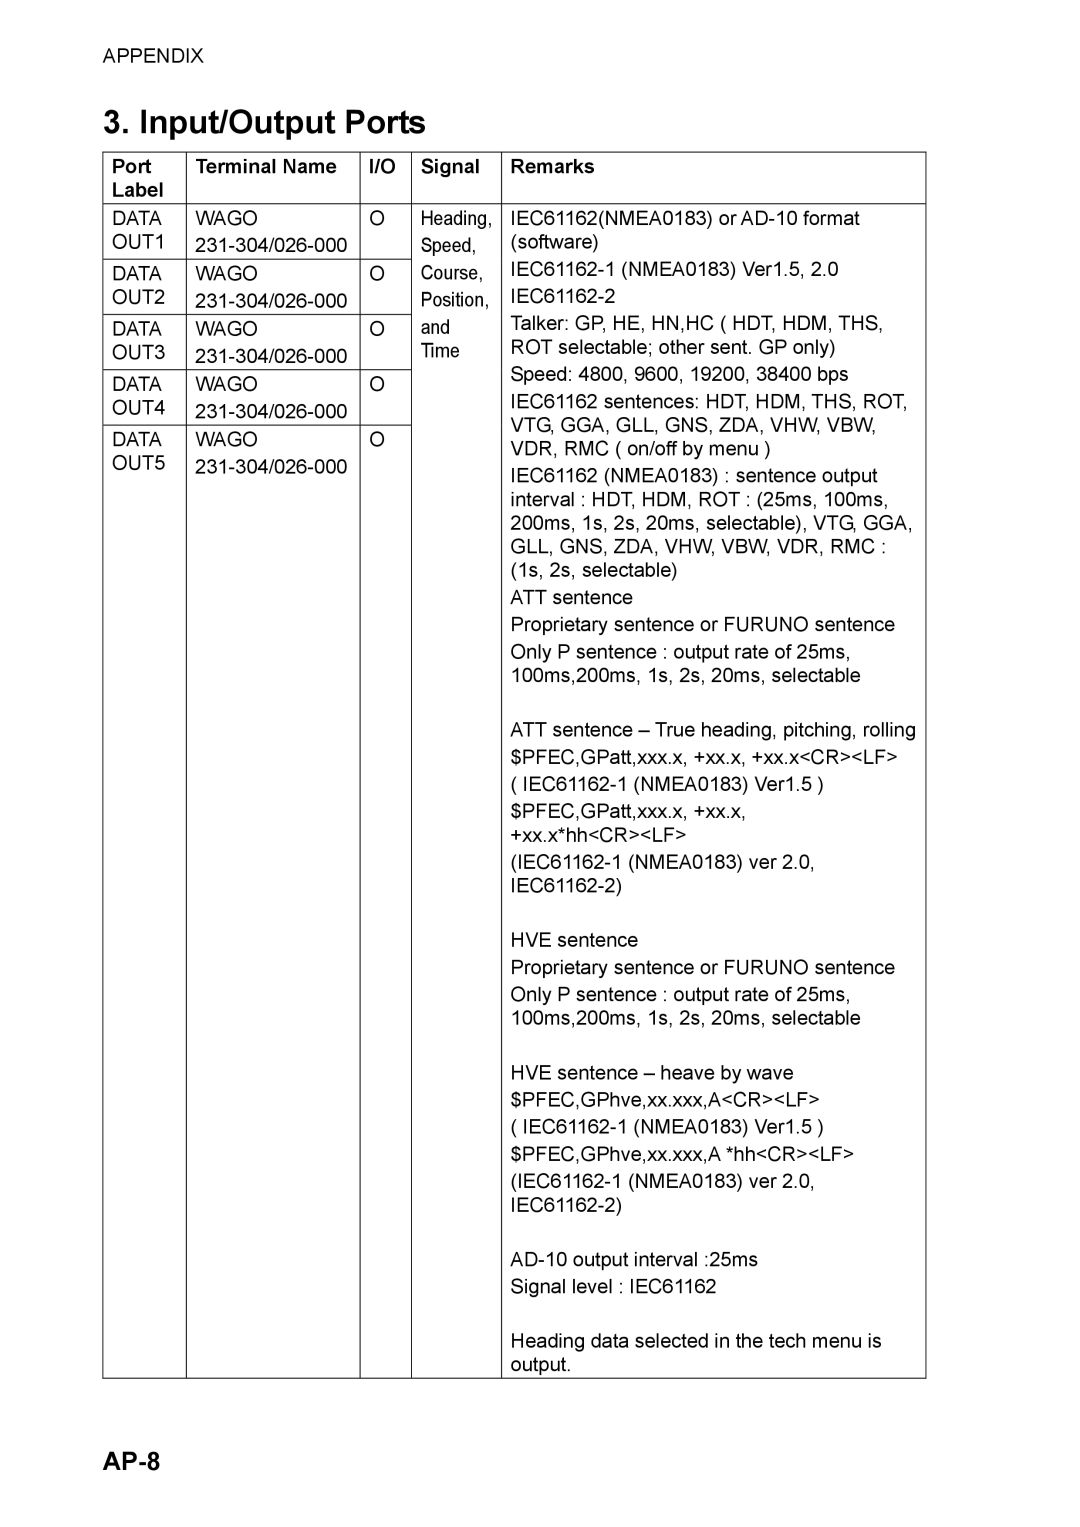 Furuno SC-110 manual Input/Output Ports, AP-8, Terminal Name, Signal, Label, Remarks 